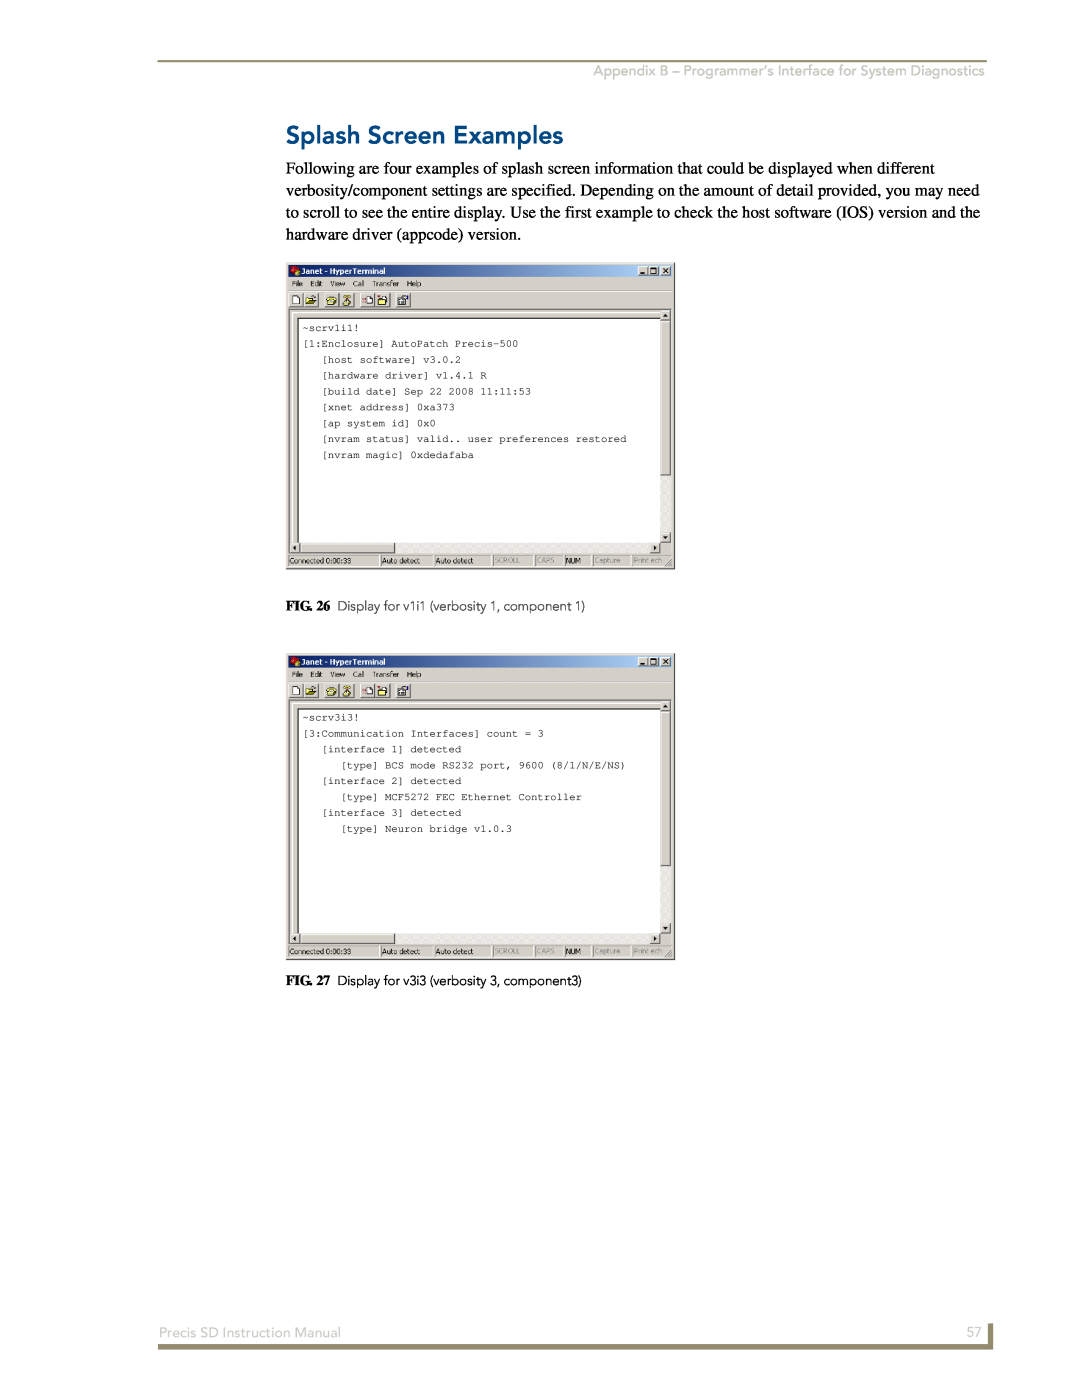 AMX Precis SD instruction manual Splash Screen Examples, Display for v3i3 verbosity 3, component3 